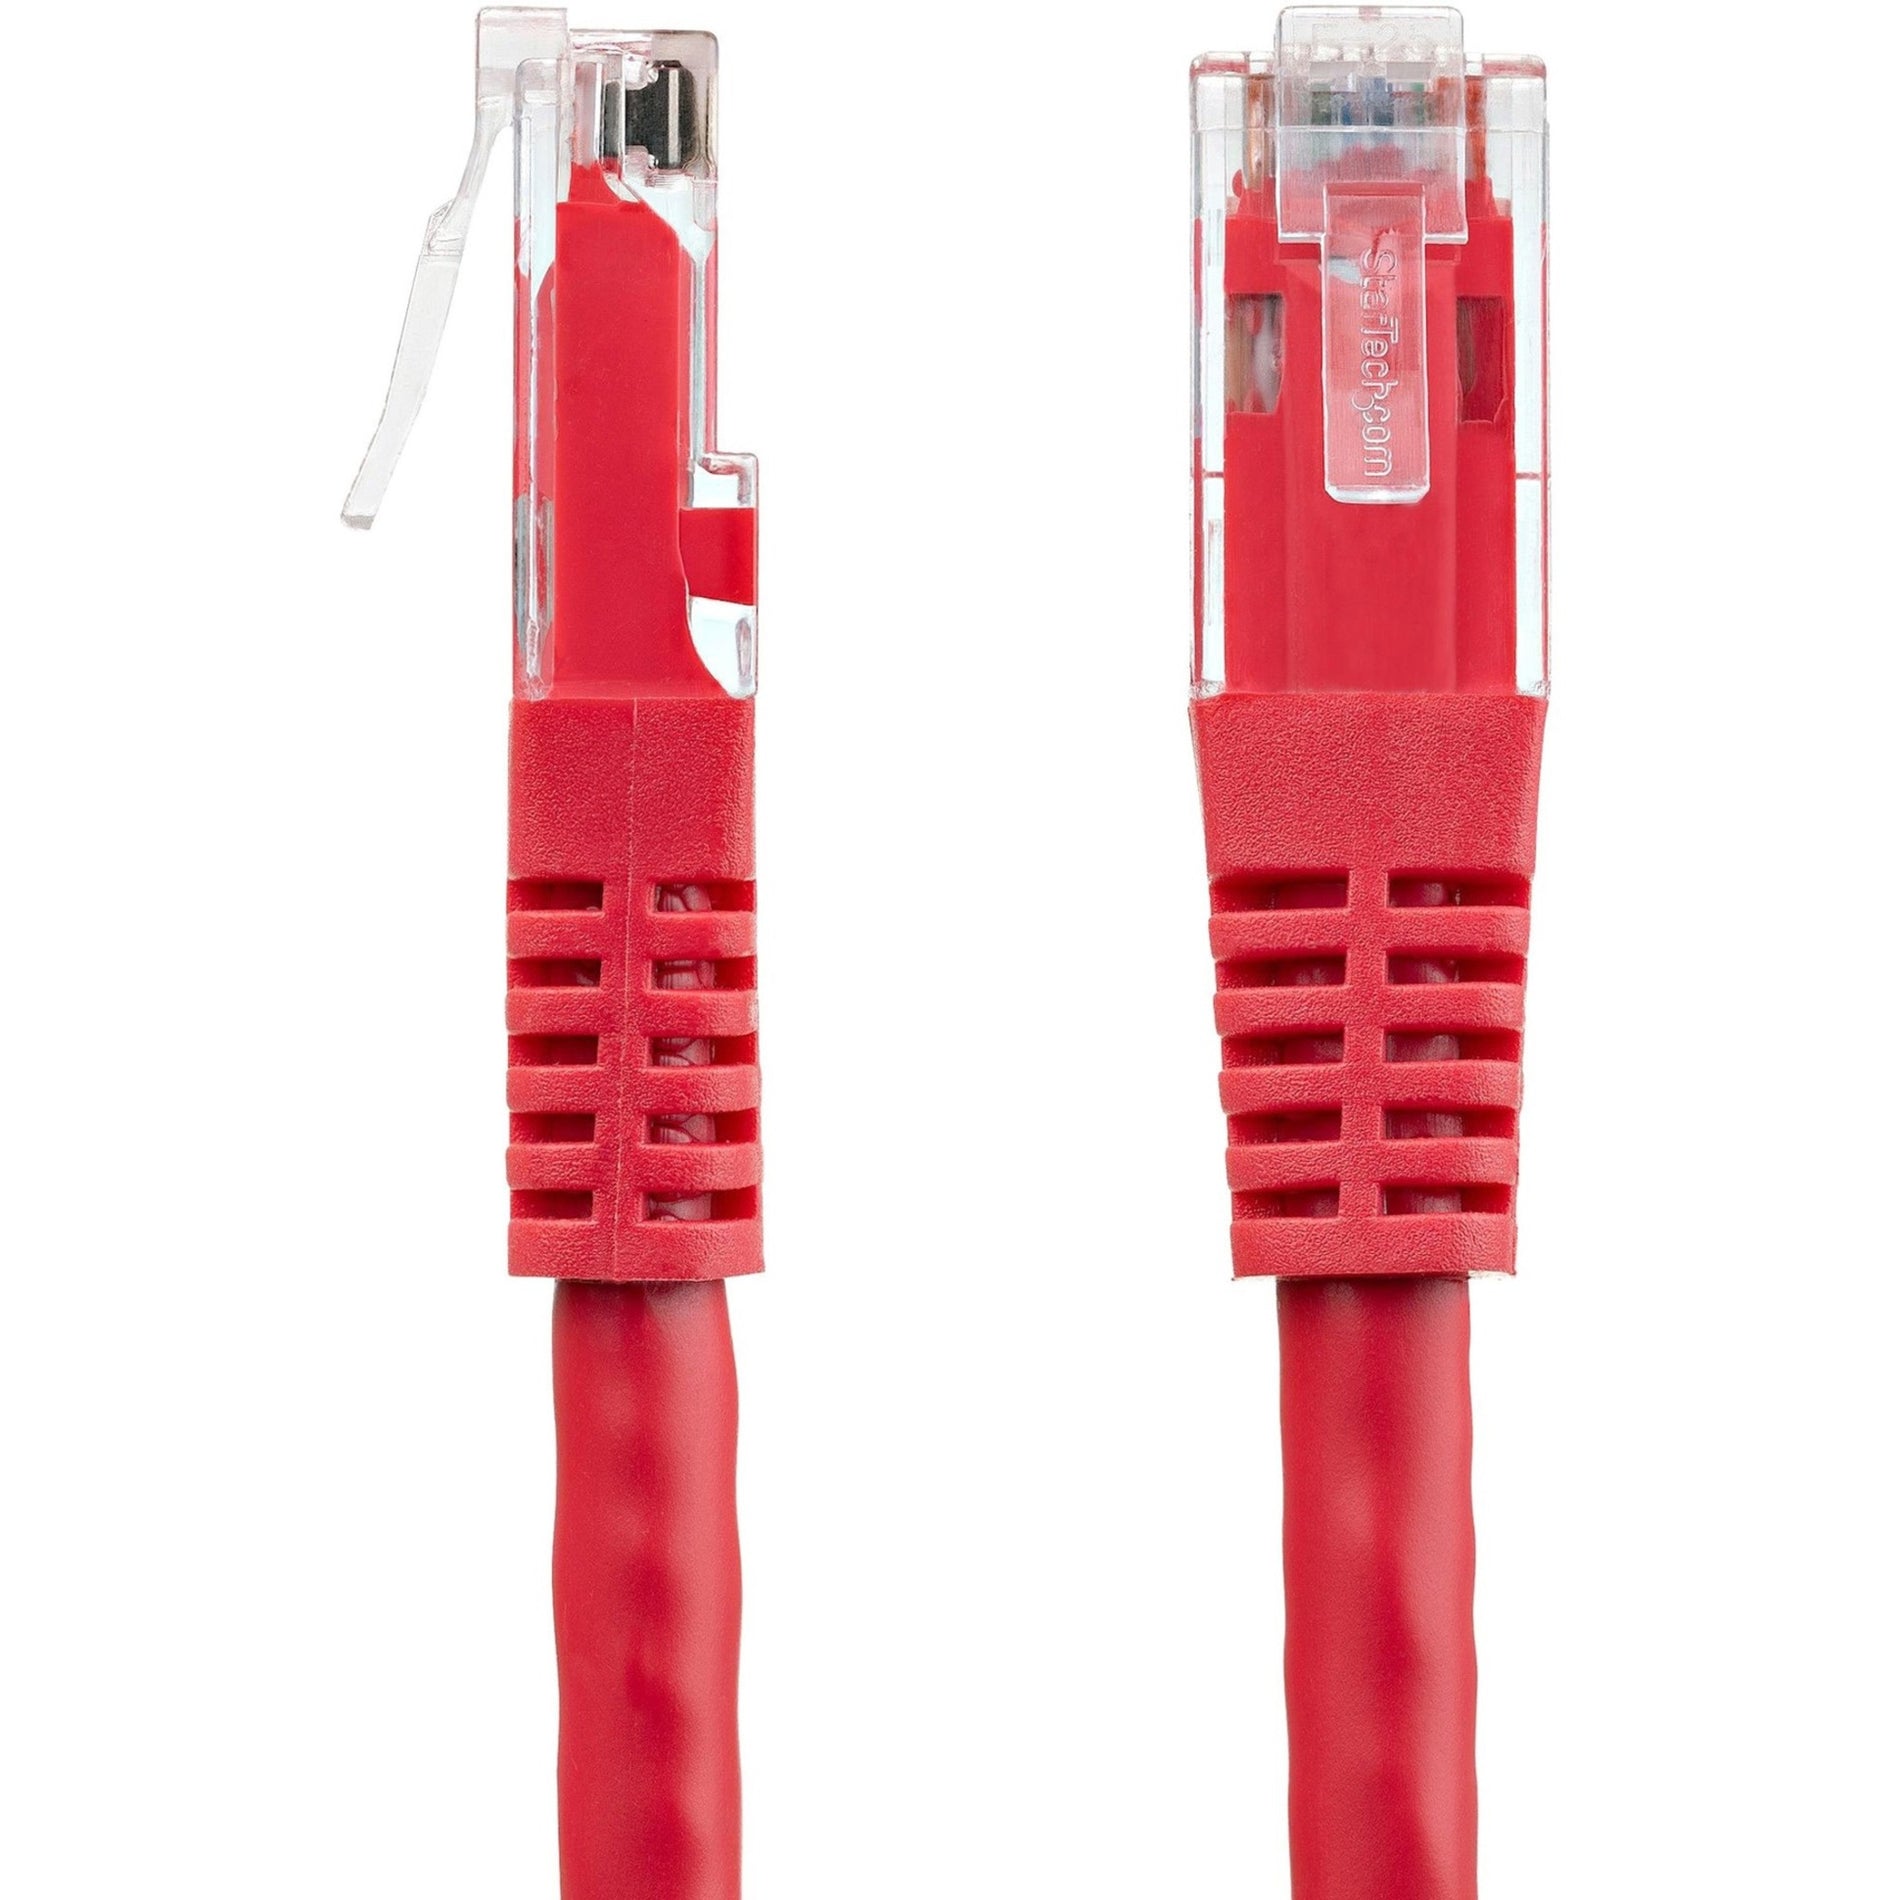 StarTech.com C6PATCH10RD 10ft Red Cat6 UTP Patch Cable ETL Verified, Molded, PoE, Strain Relief, Damage Resistant, Corrosion Resistant